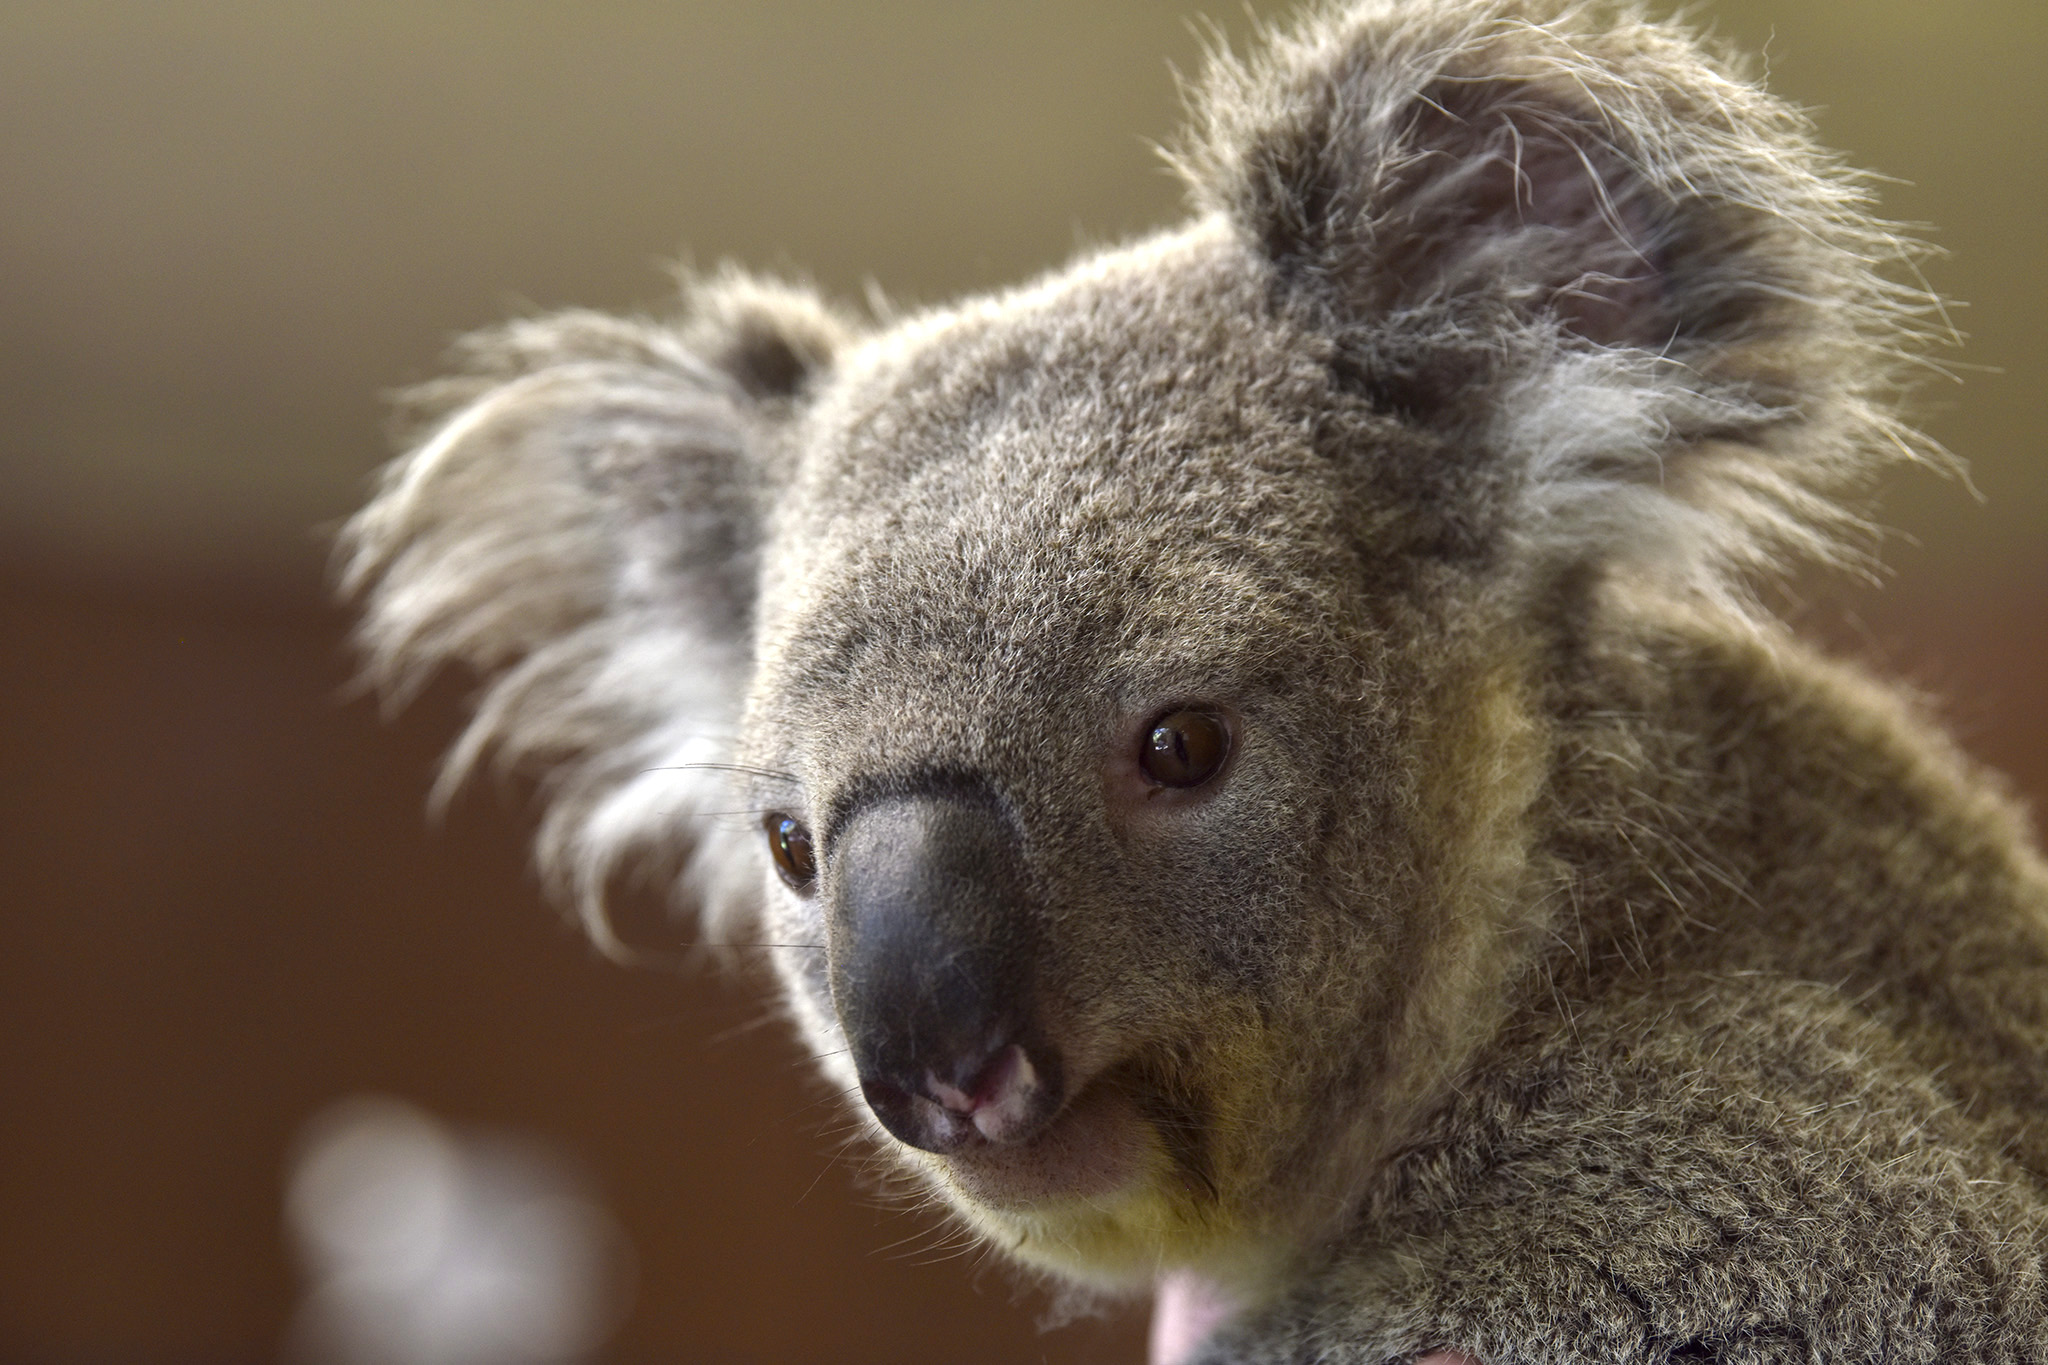 How San Francisco parks feed the koalas at the SF Zoo